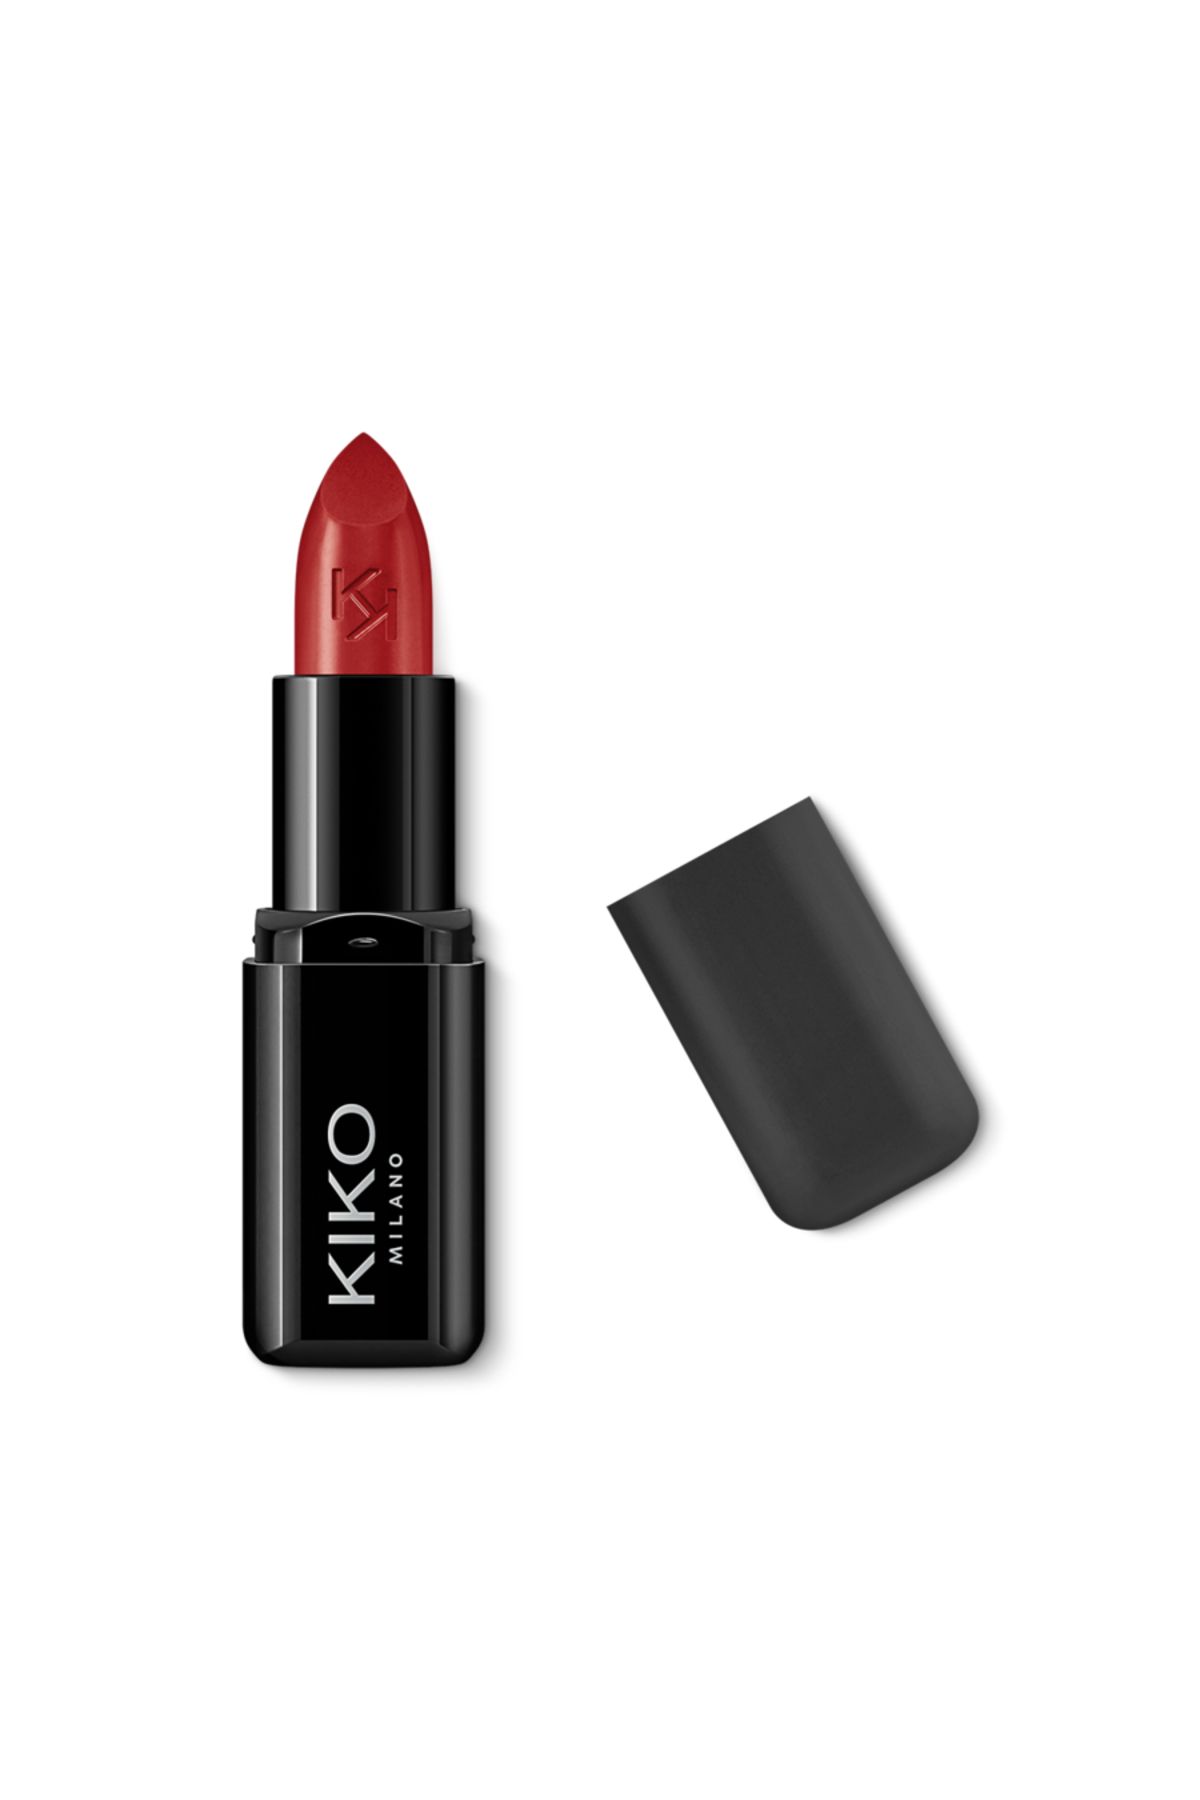 KIKO RUJ - Smart Fusion Lipstick - 461 Burnt Red